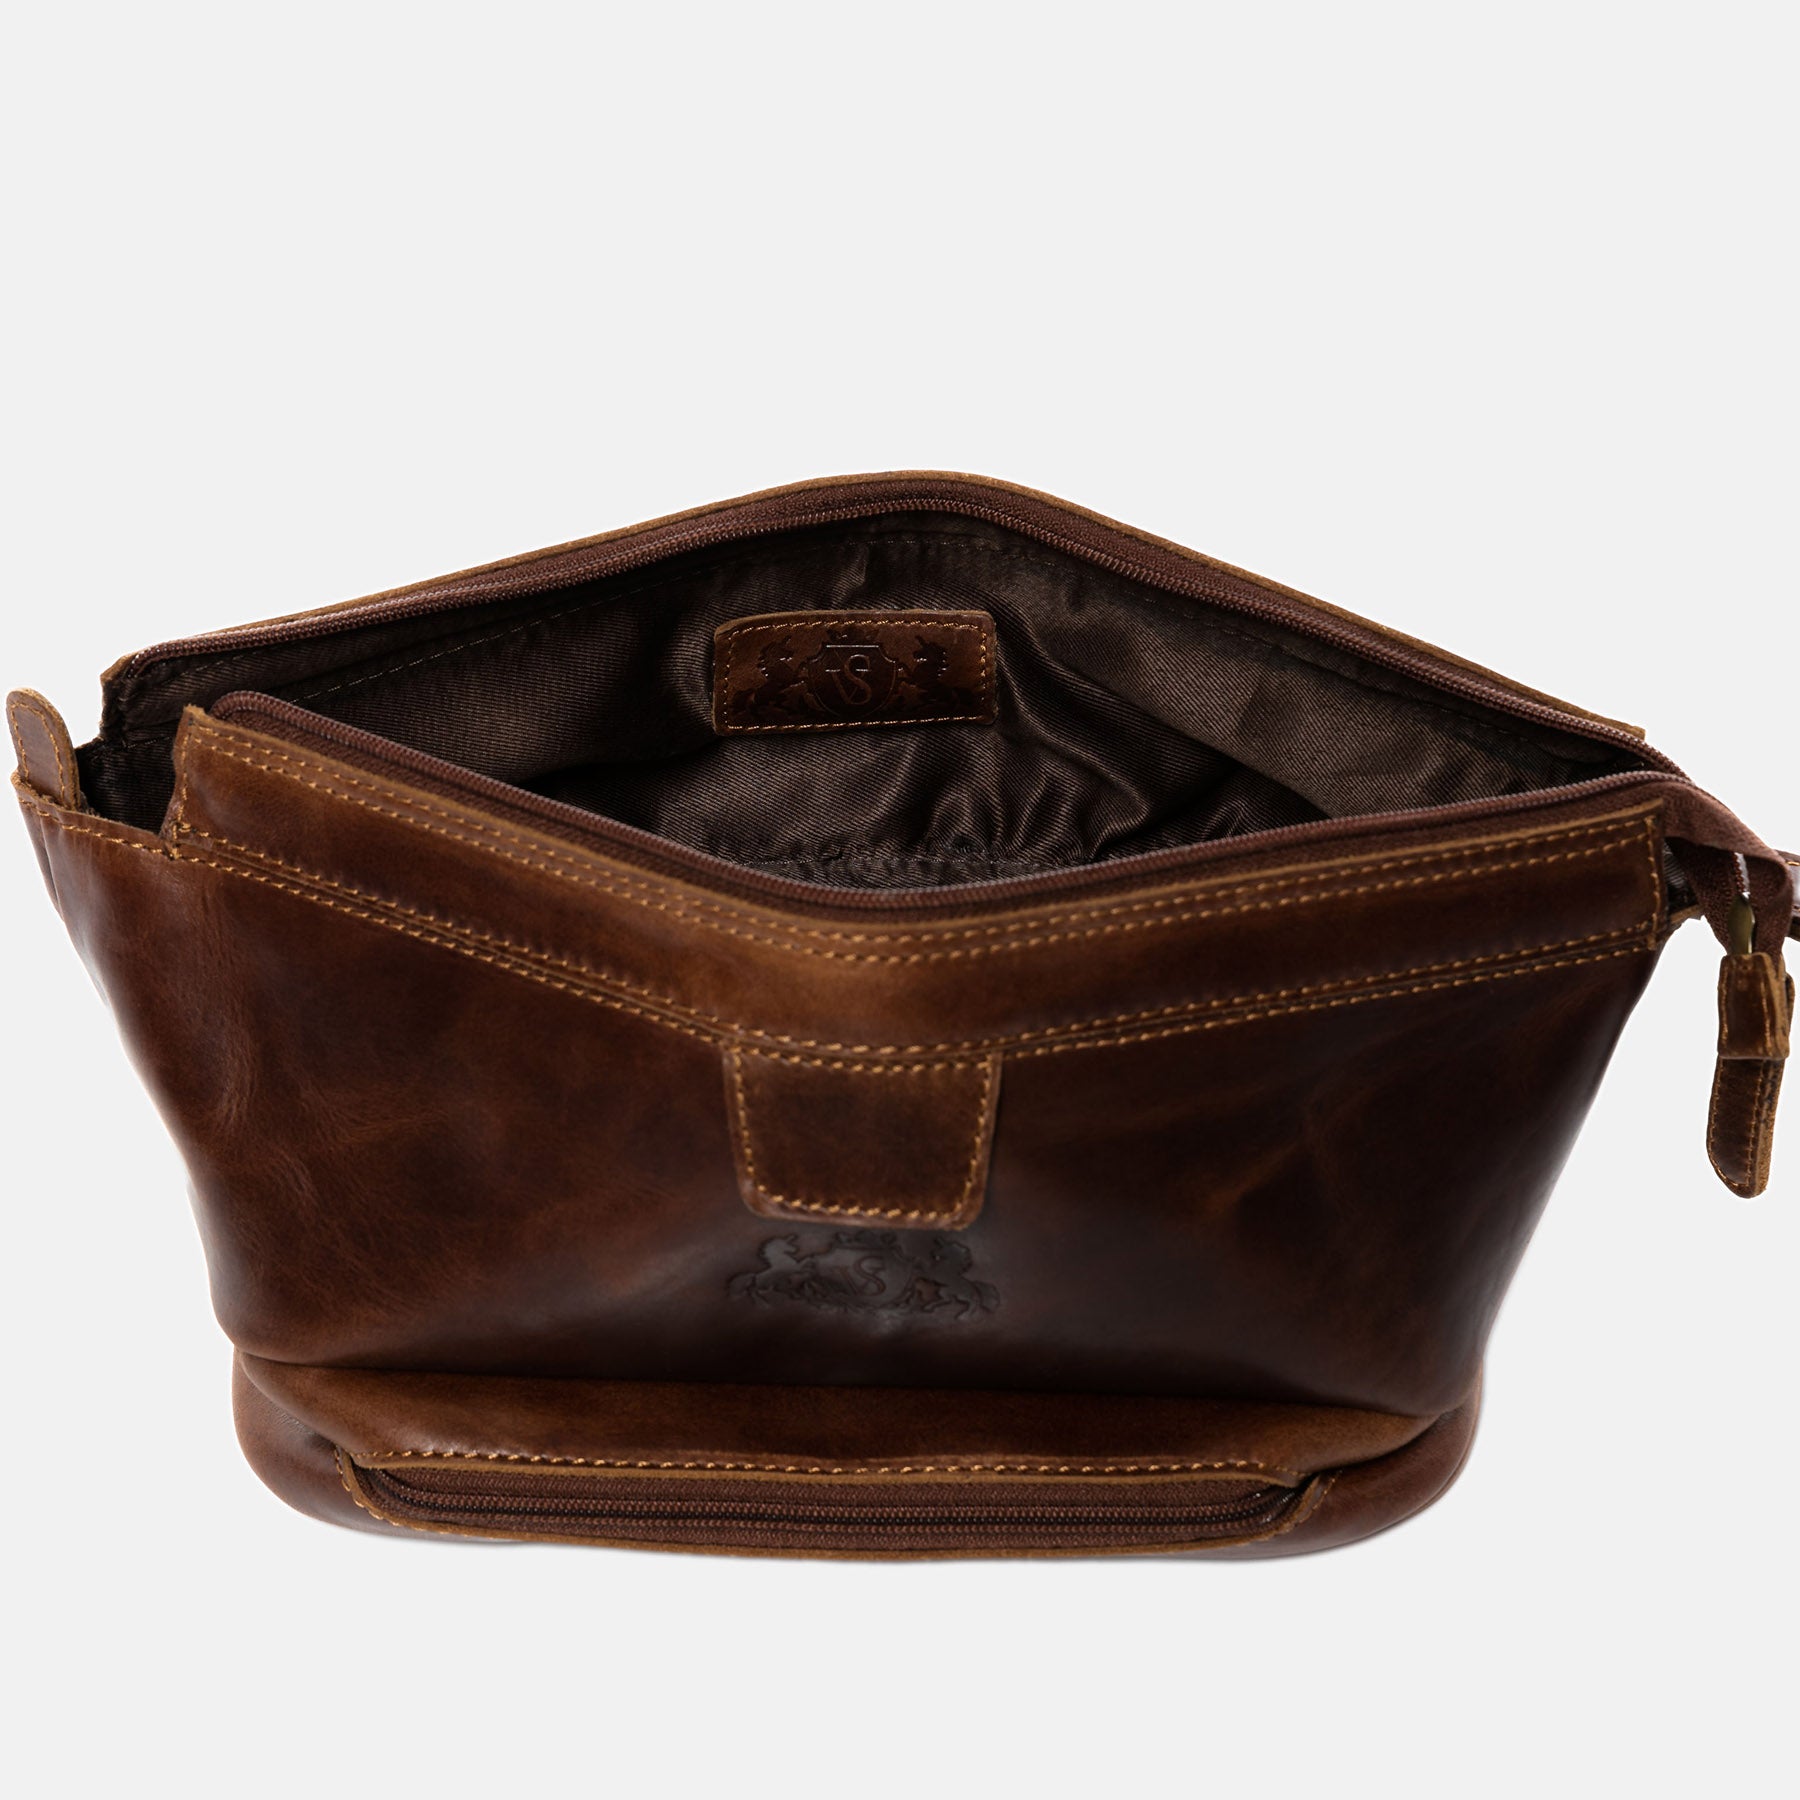 Toilet bag NOTTINGHAM natural leather brown-cognac